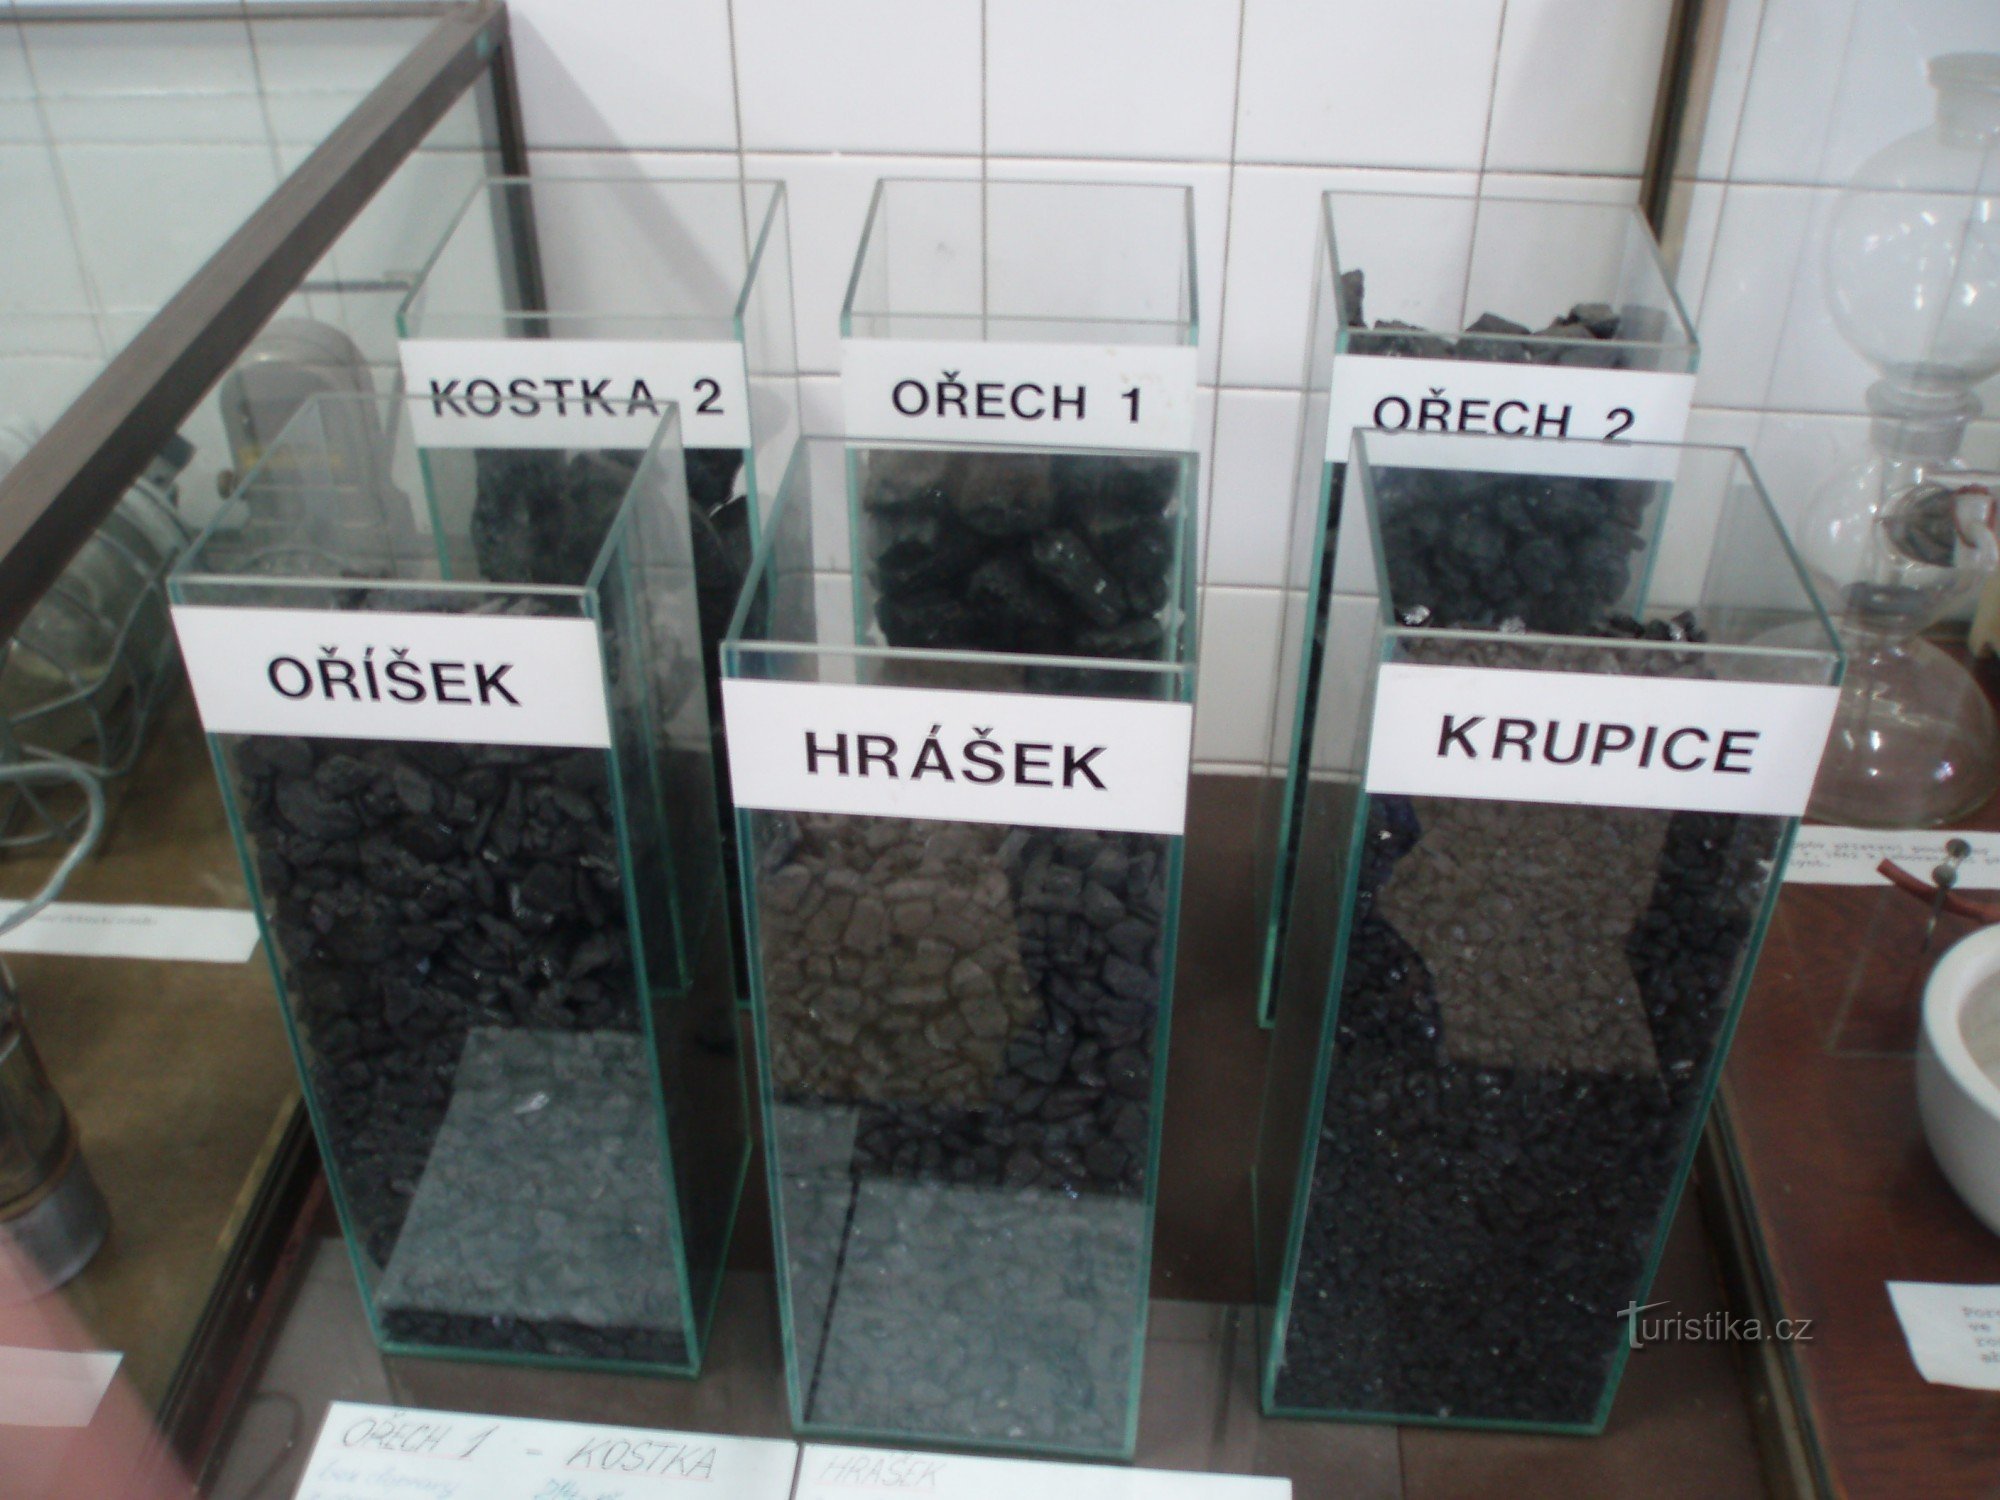 Types of coal